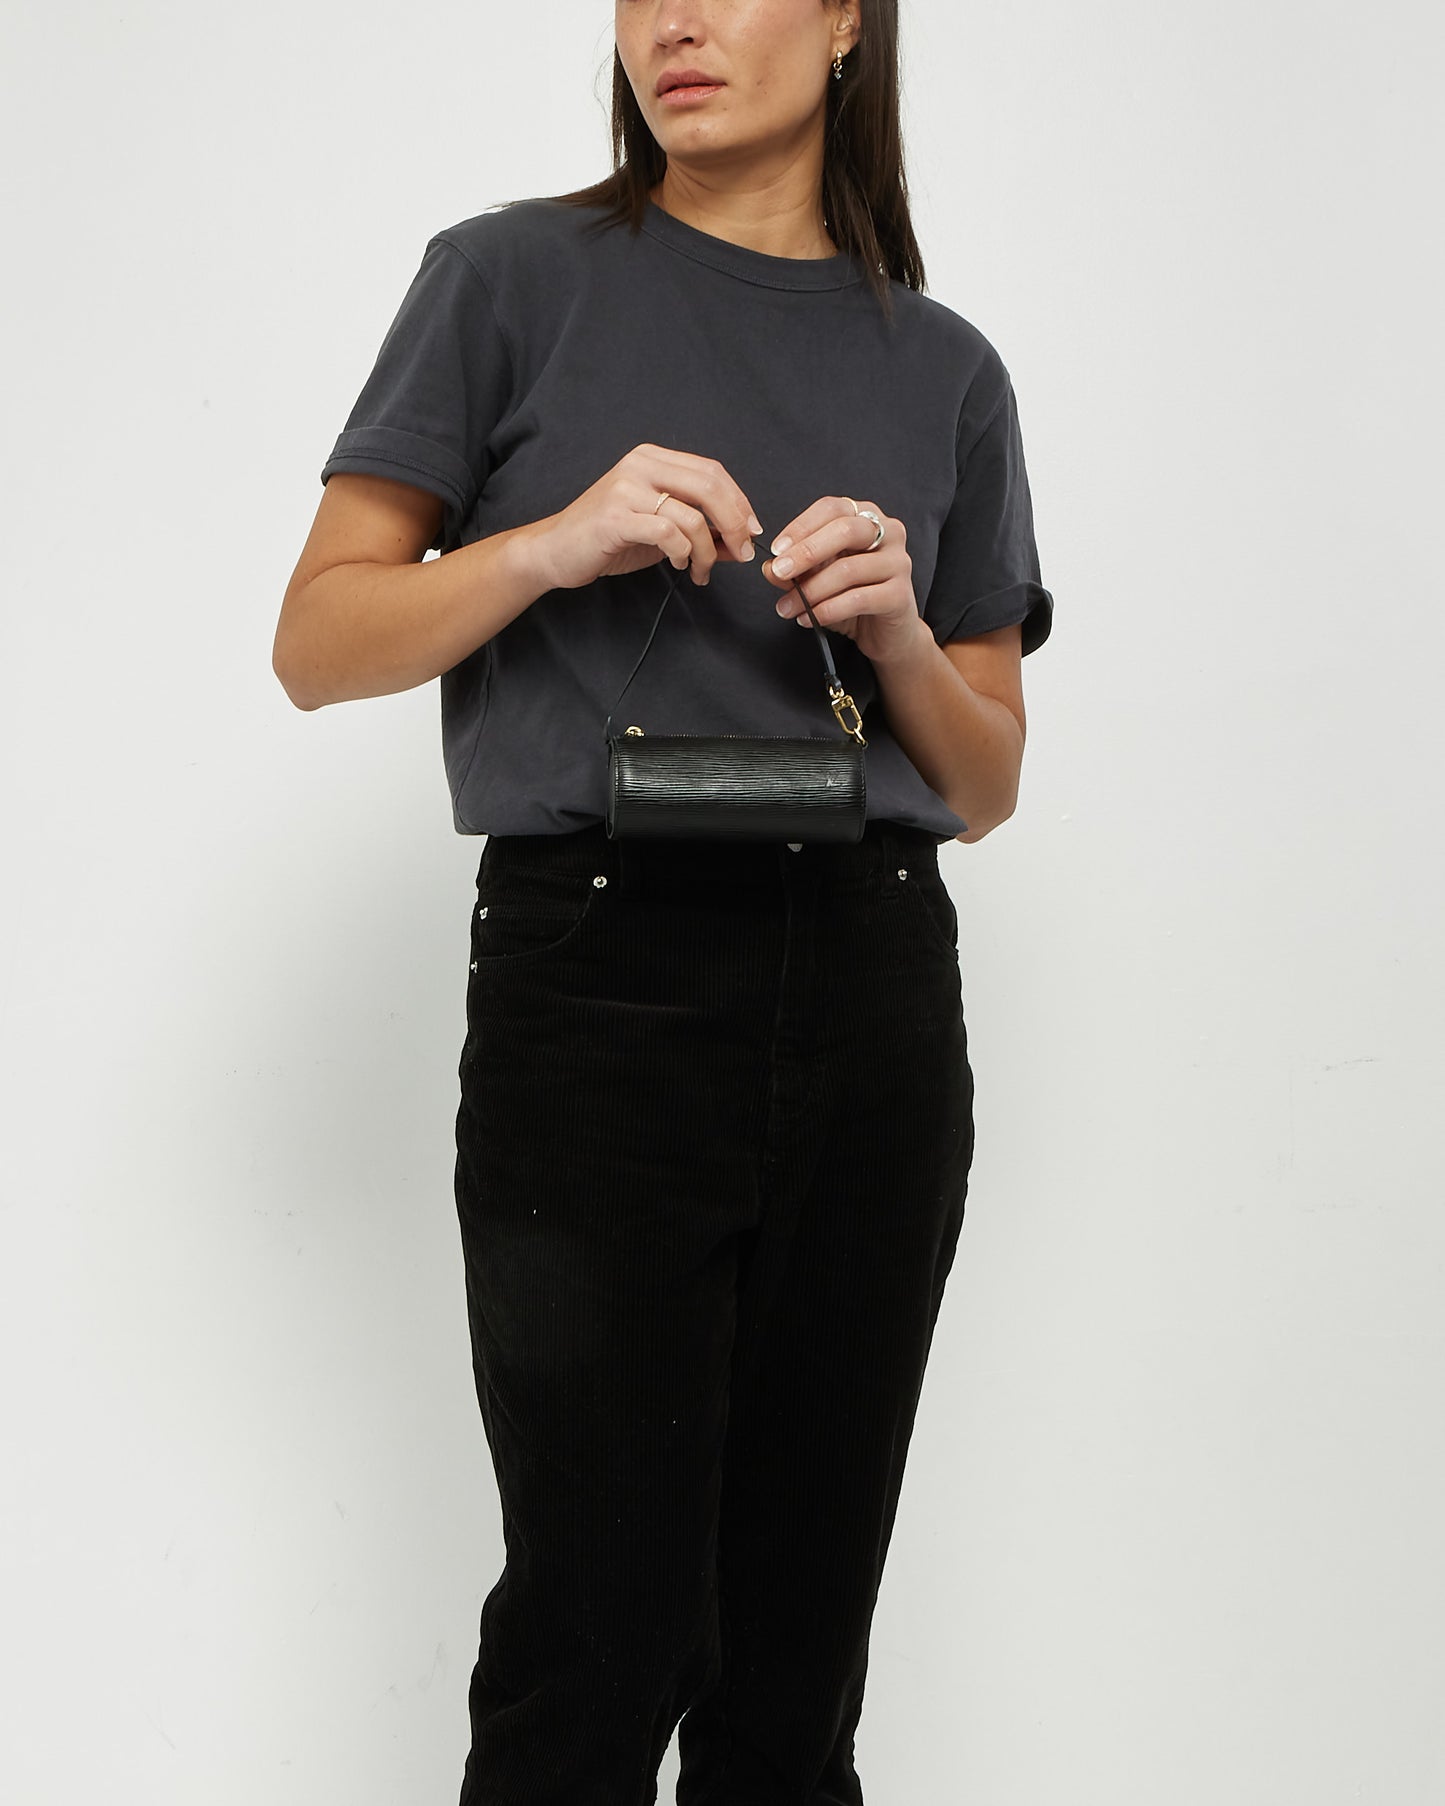 Louis Vuitton Black Epi Leather Mini Papillion Bag